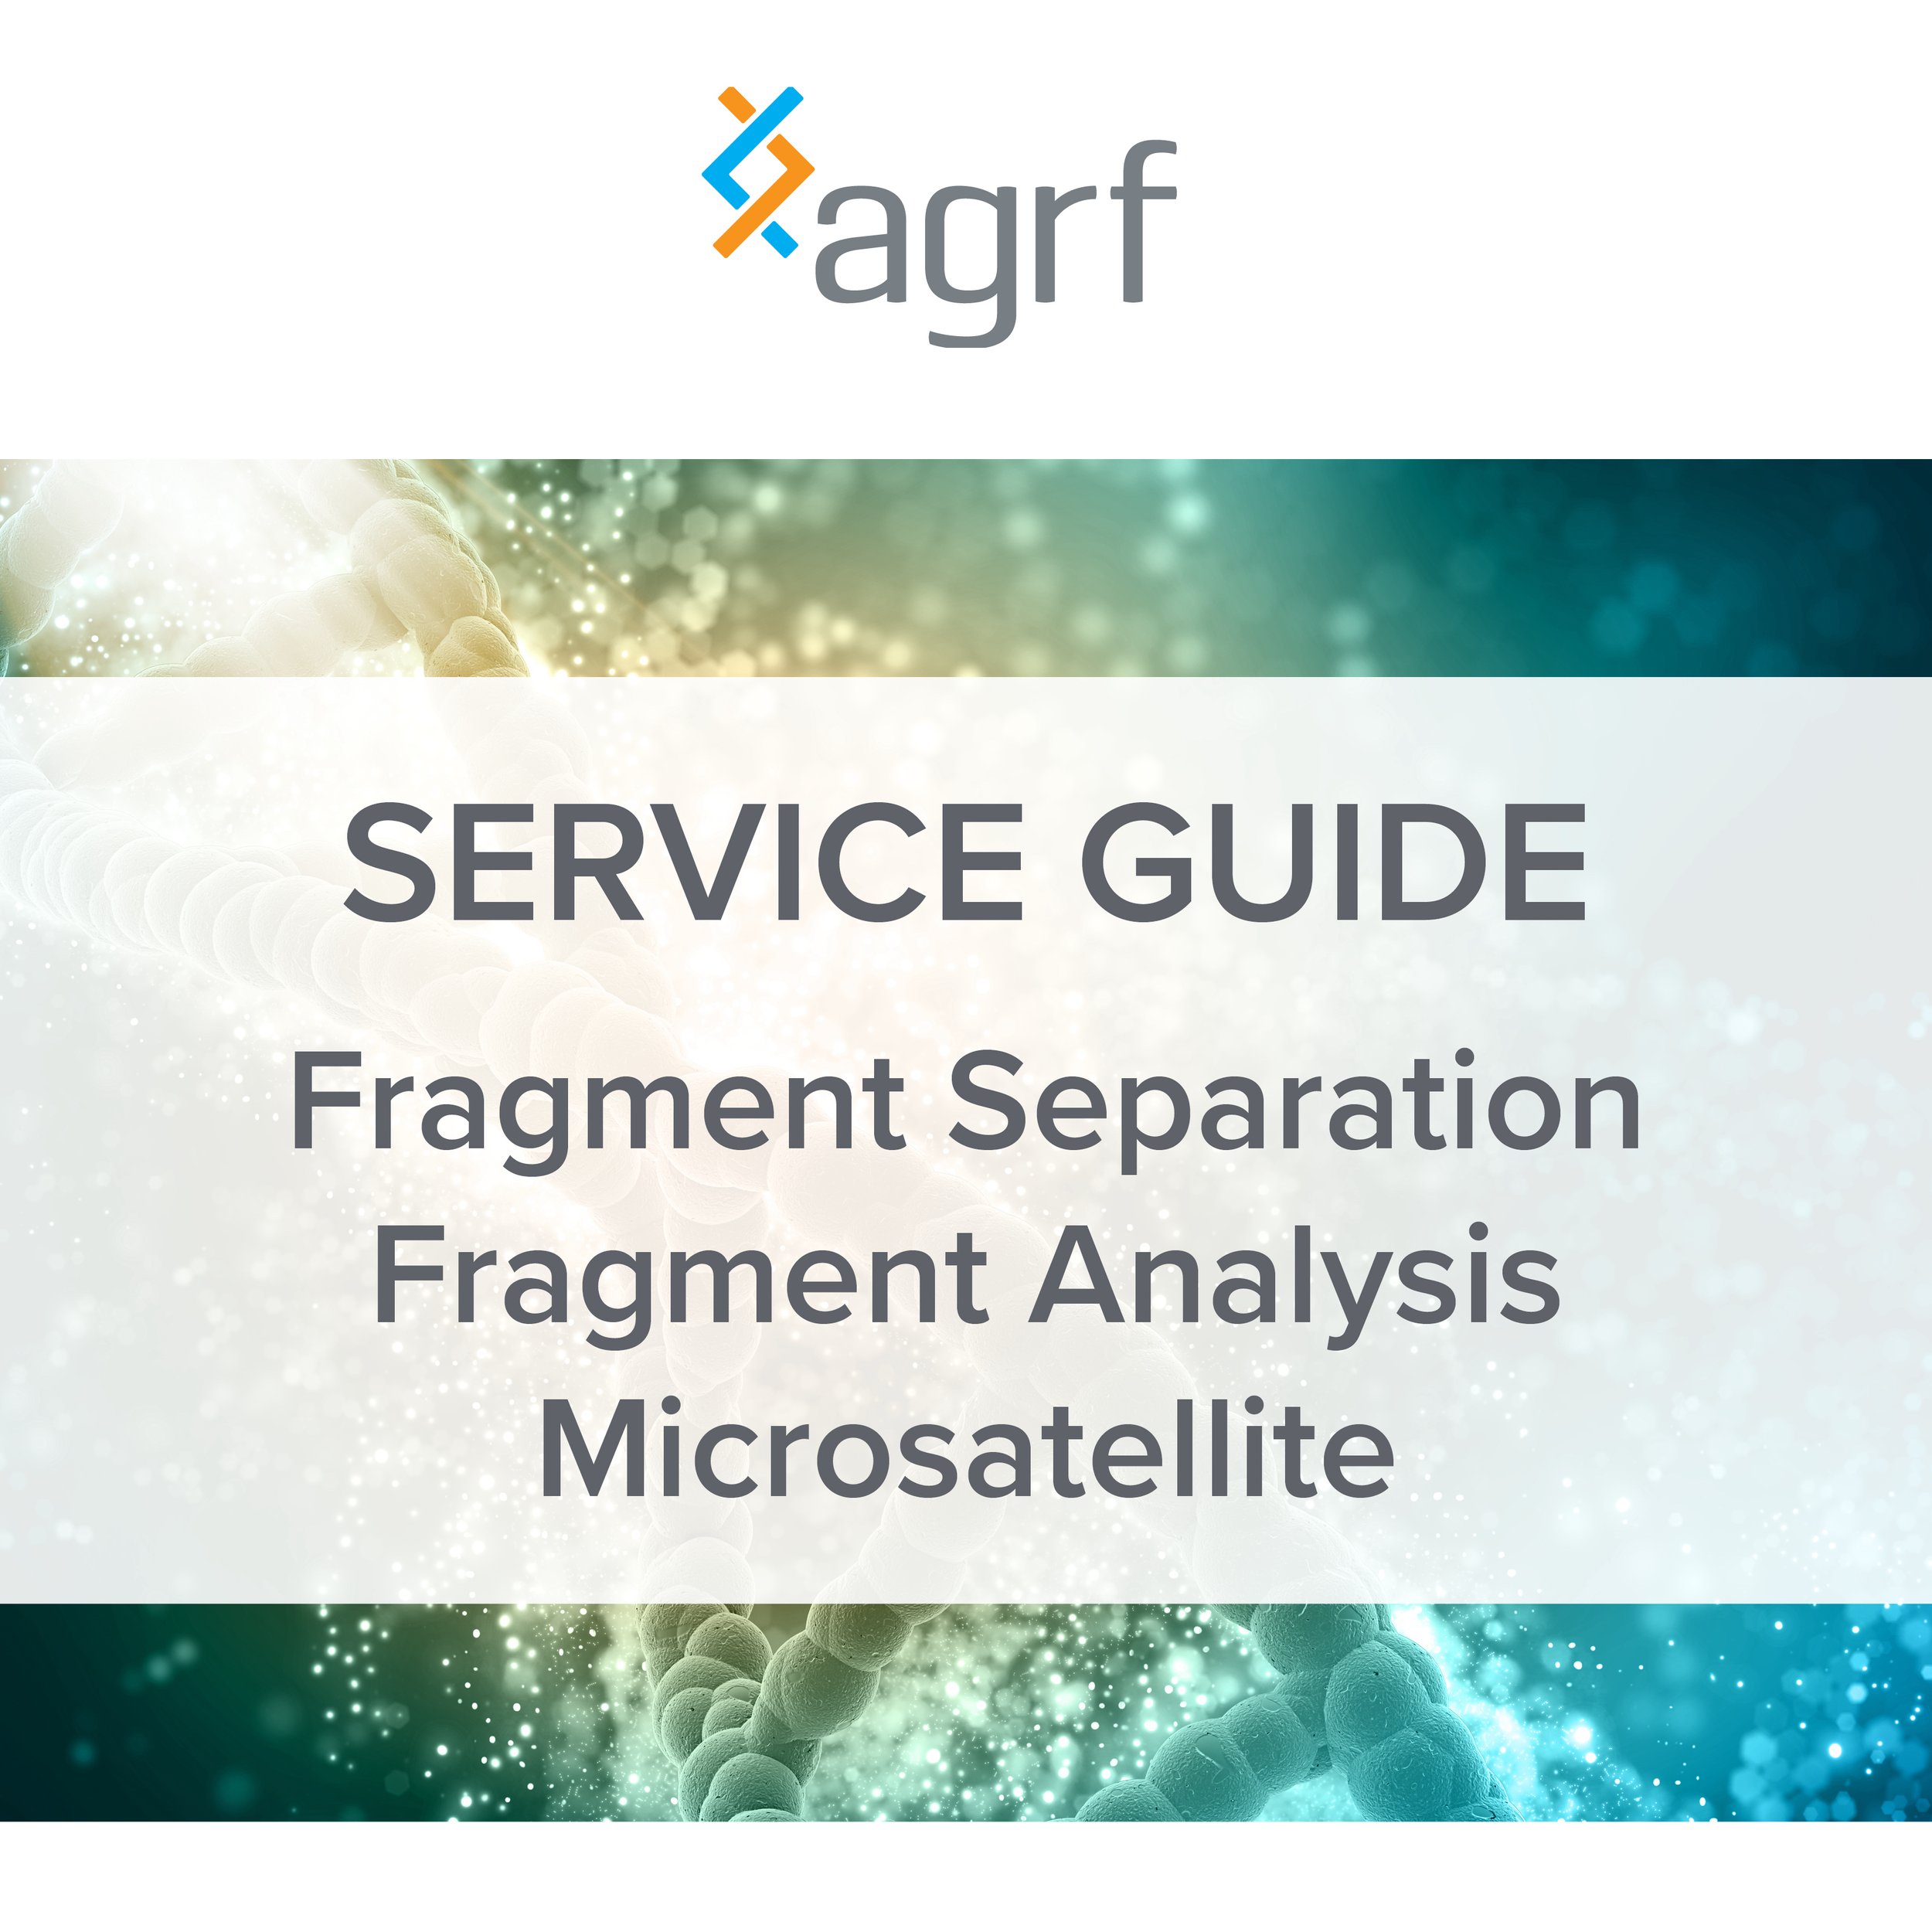 Web Tile_Fragment Separation Analysis and Microsatellite.jpg